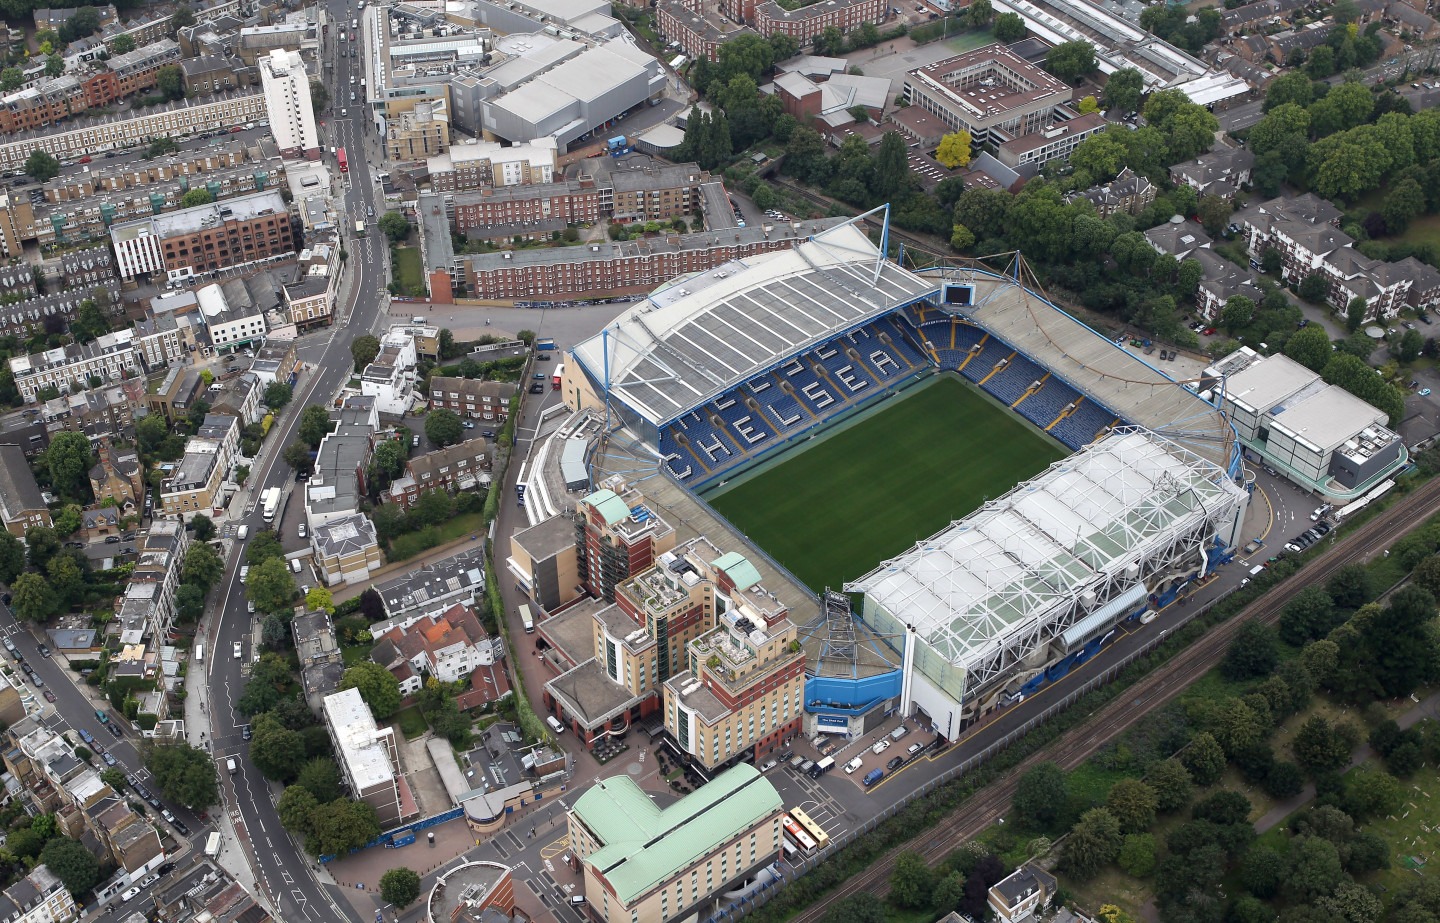 London: Stamford Bridge Stadium (FC Chelsea), Stamford Brid…